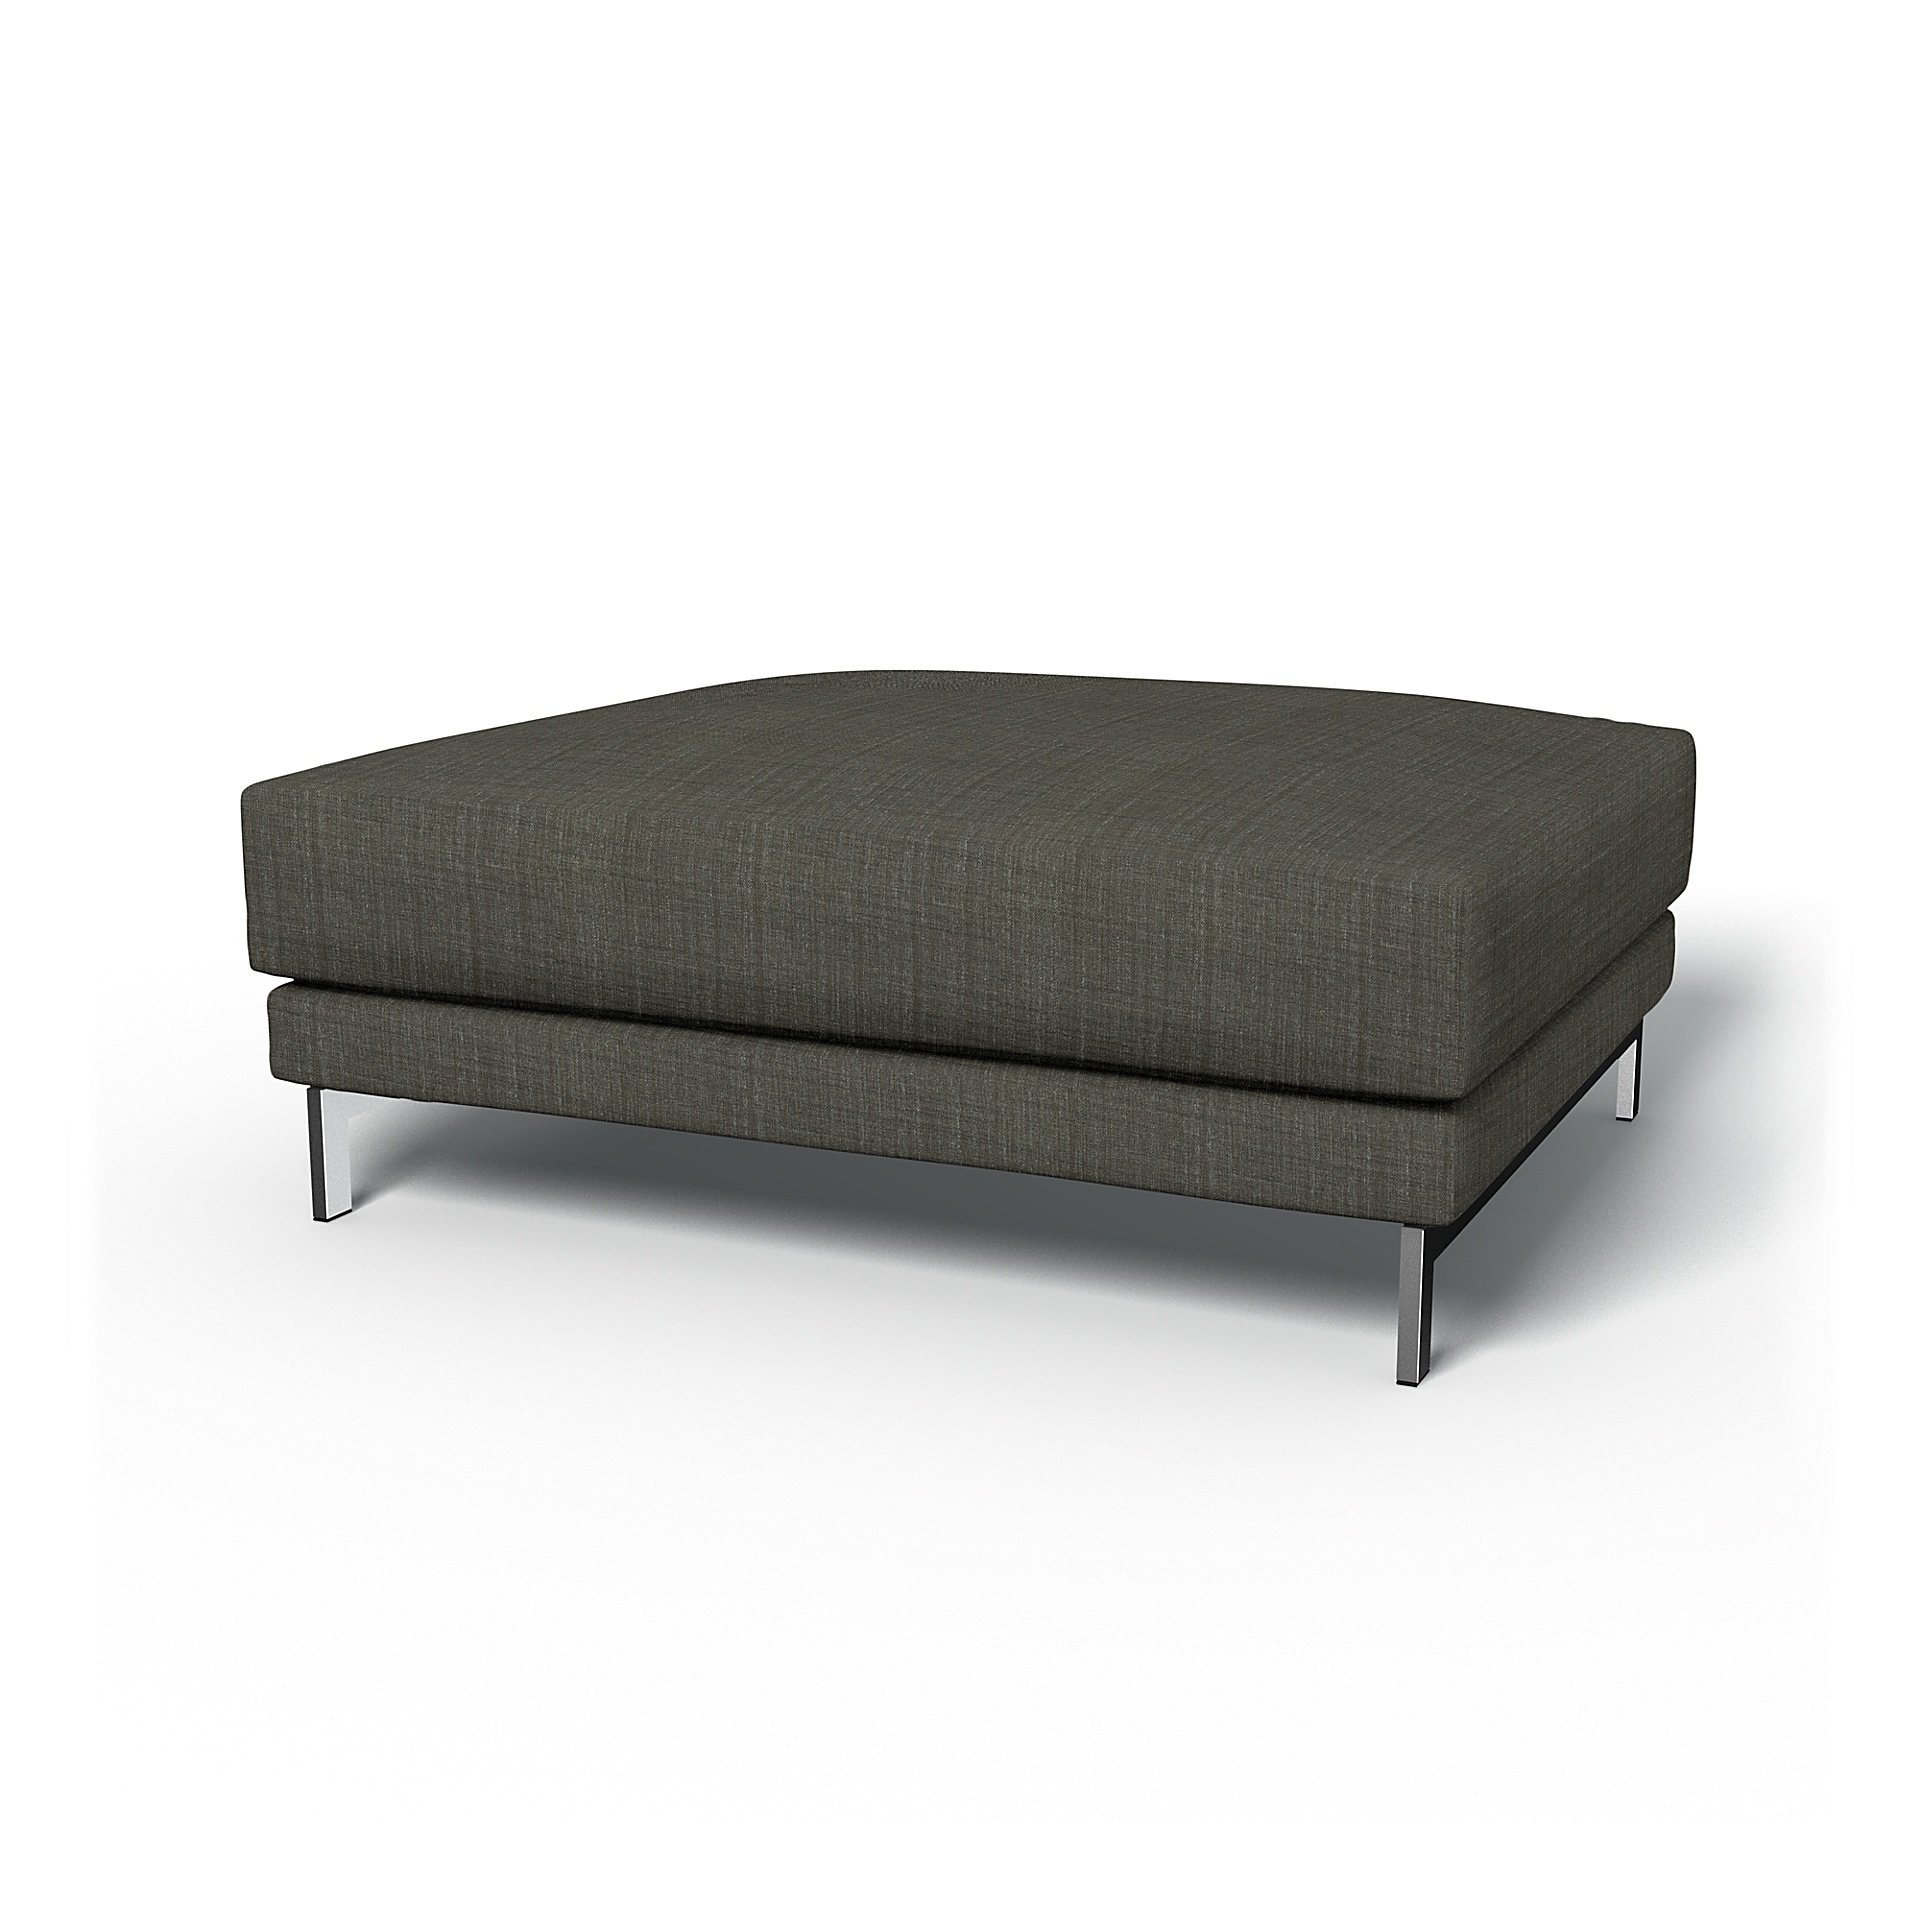 IKEA - Nockeby Footstool Cover, Mole Brown, Boucle & Texture - Bemz